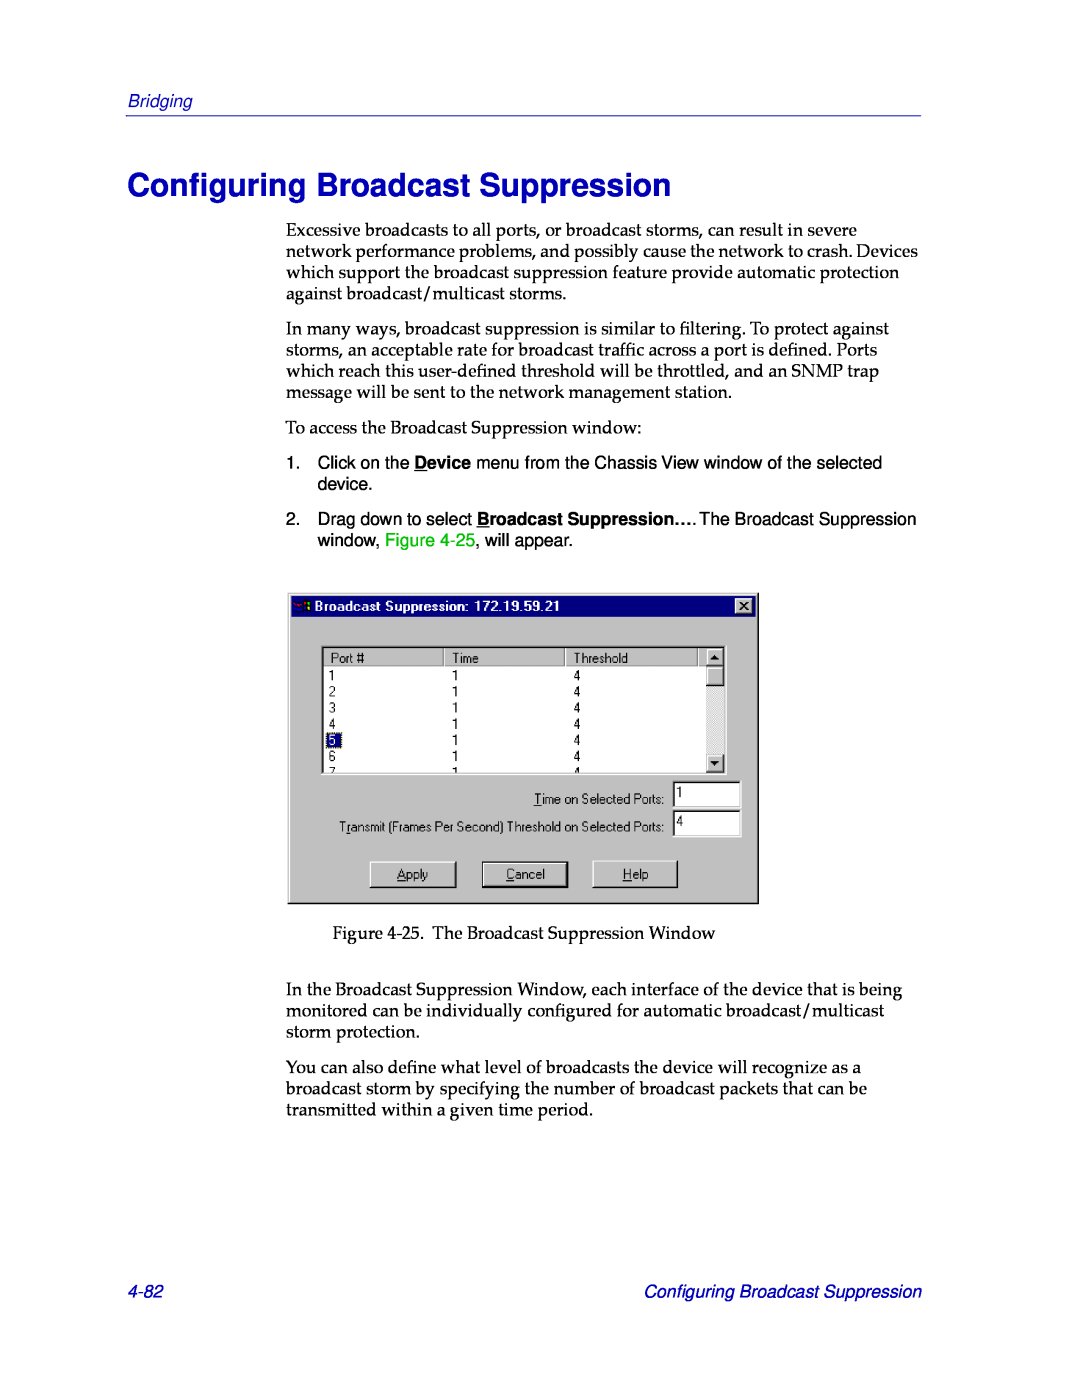 Cabletron Systems CSX400, CSX200 manual Conﬁguring Broadcast Suppression, 4-82, Bridging 